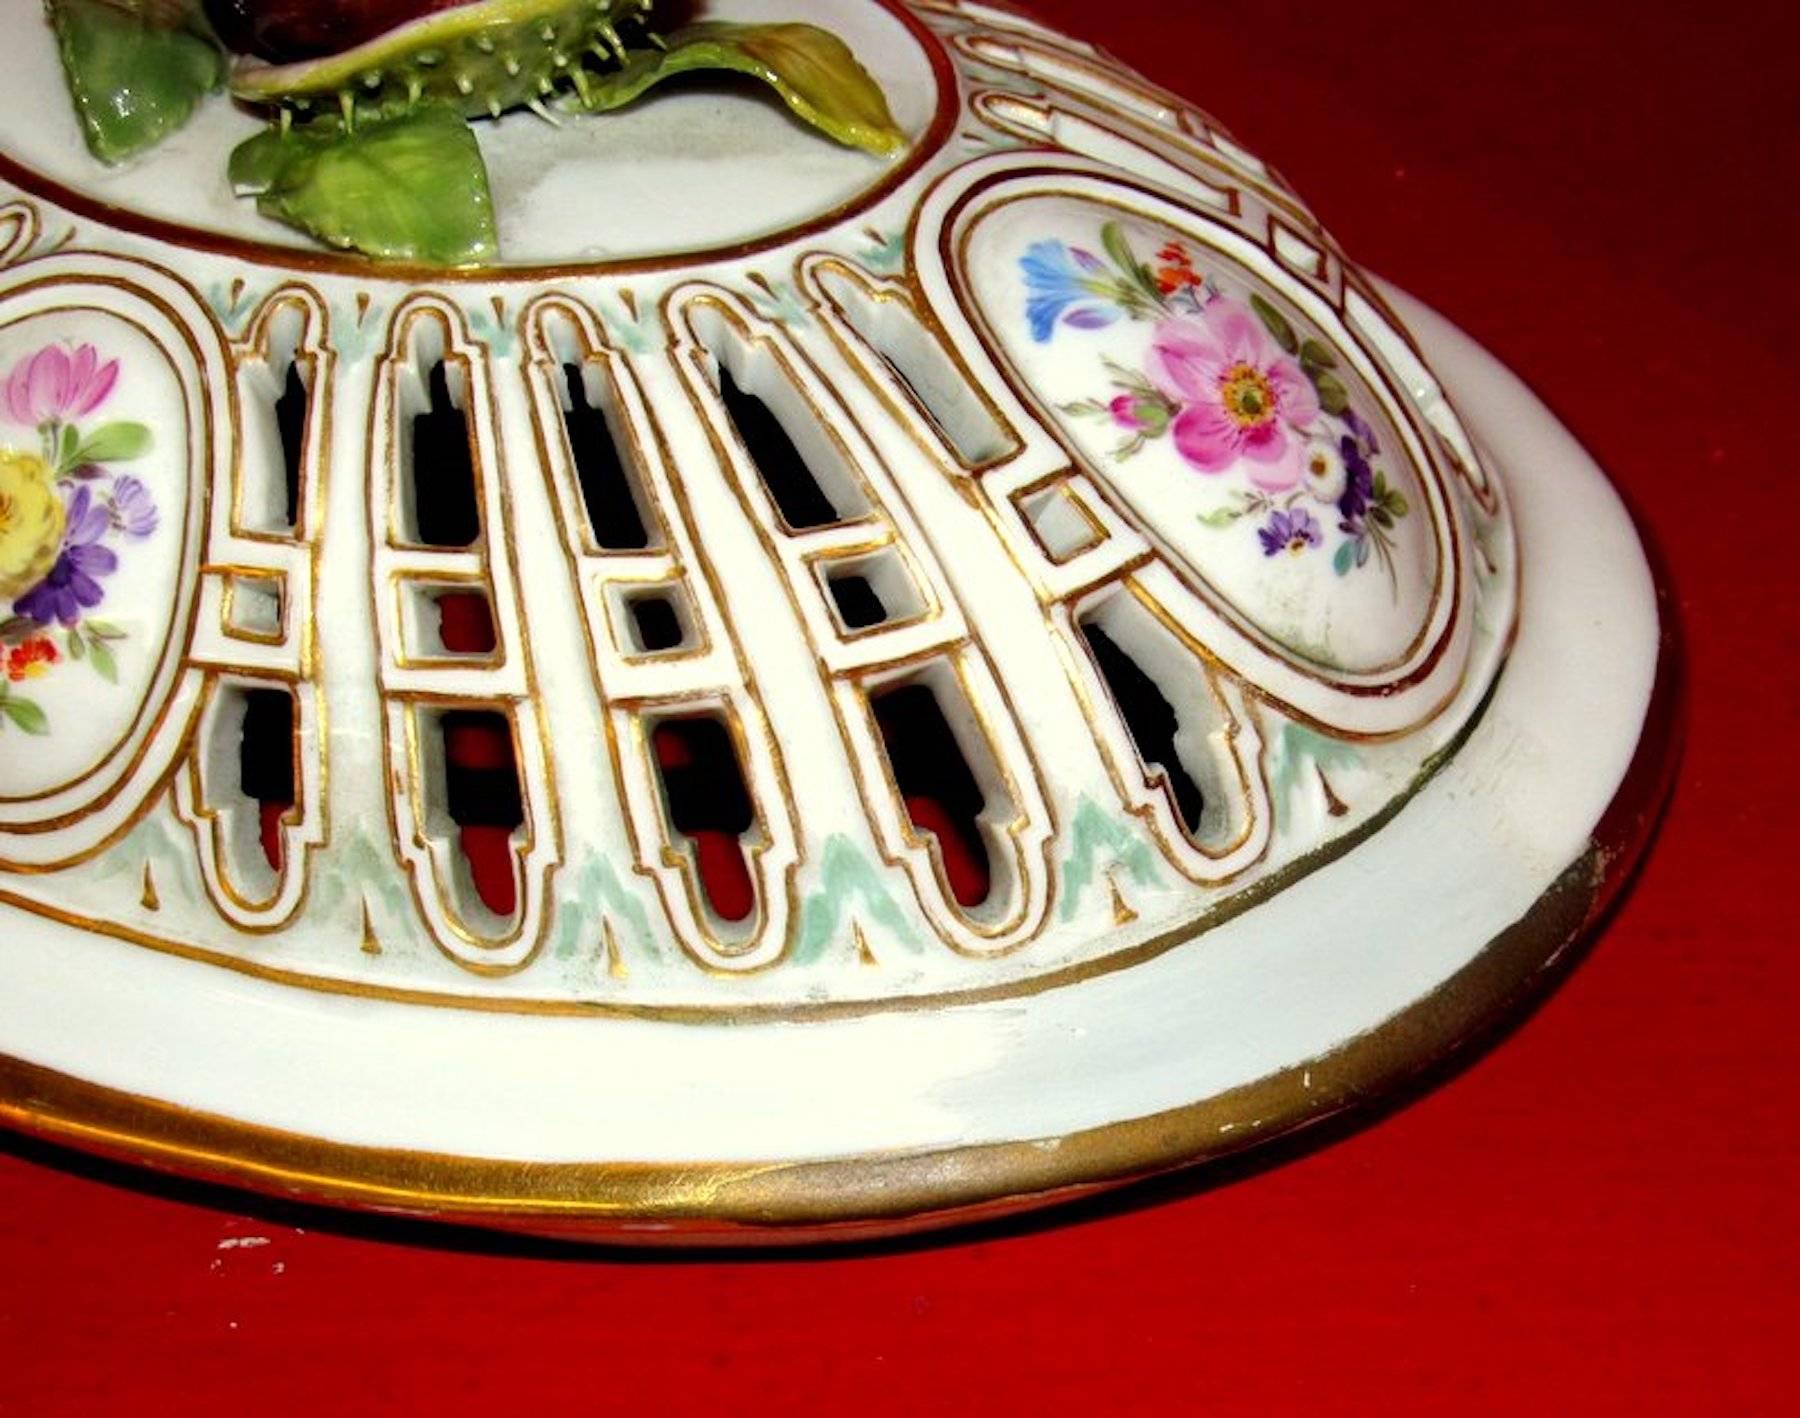 19th Century Antique Dresden or Meissen Hand-Painted Porcelain Chestnut Basket or Tureen